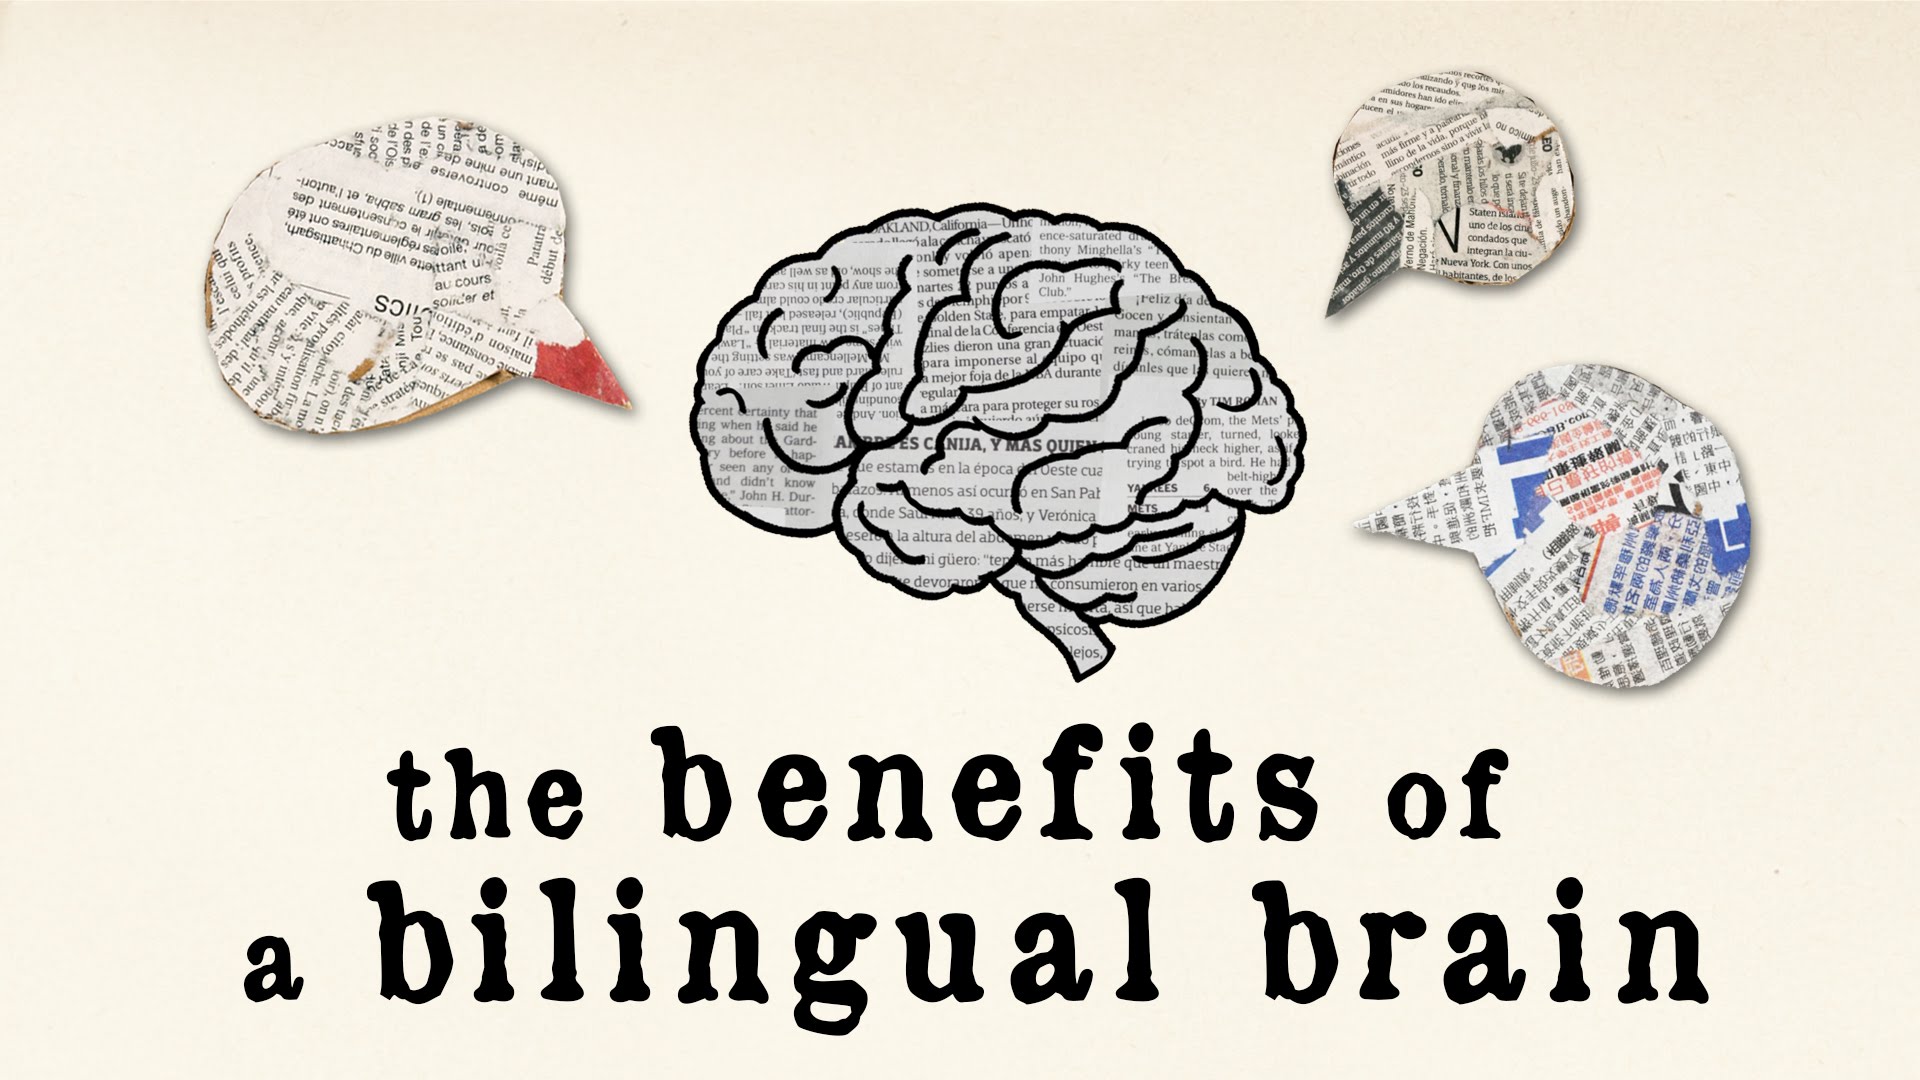 The benefits of a bilingual brain – Mia Nacamulli